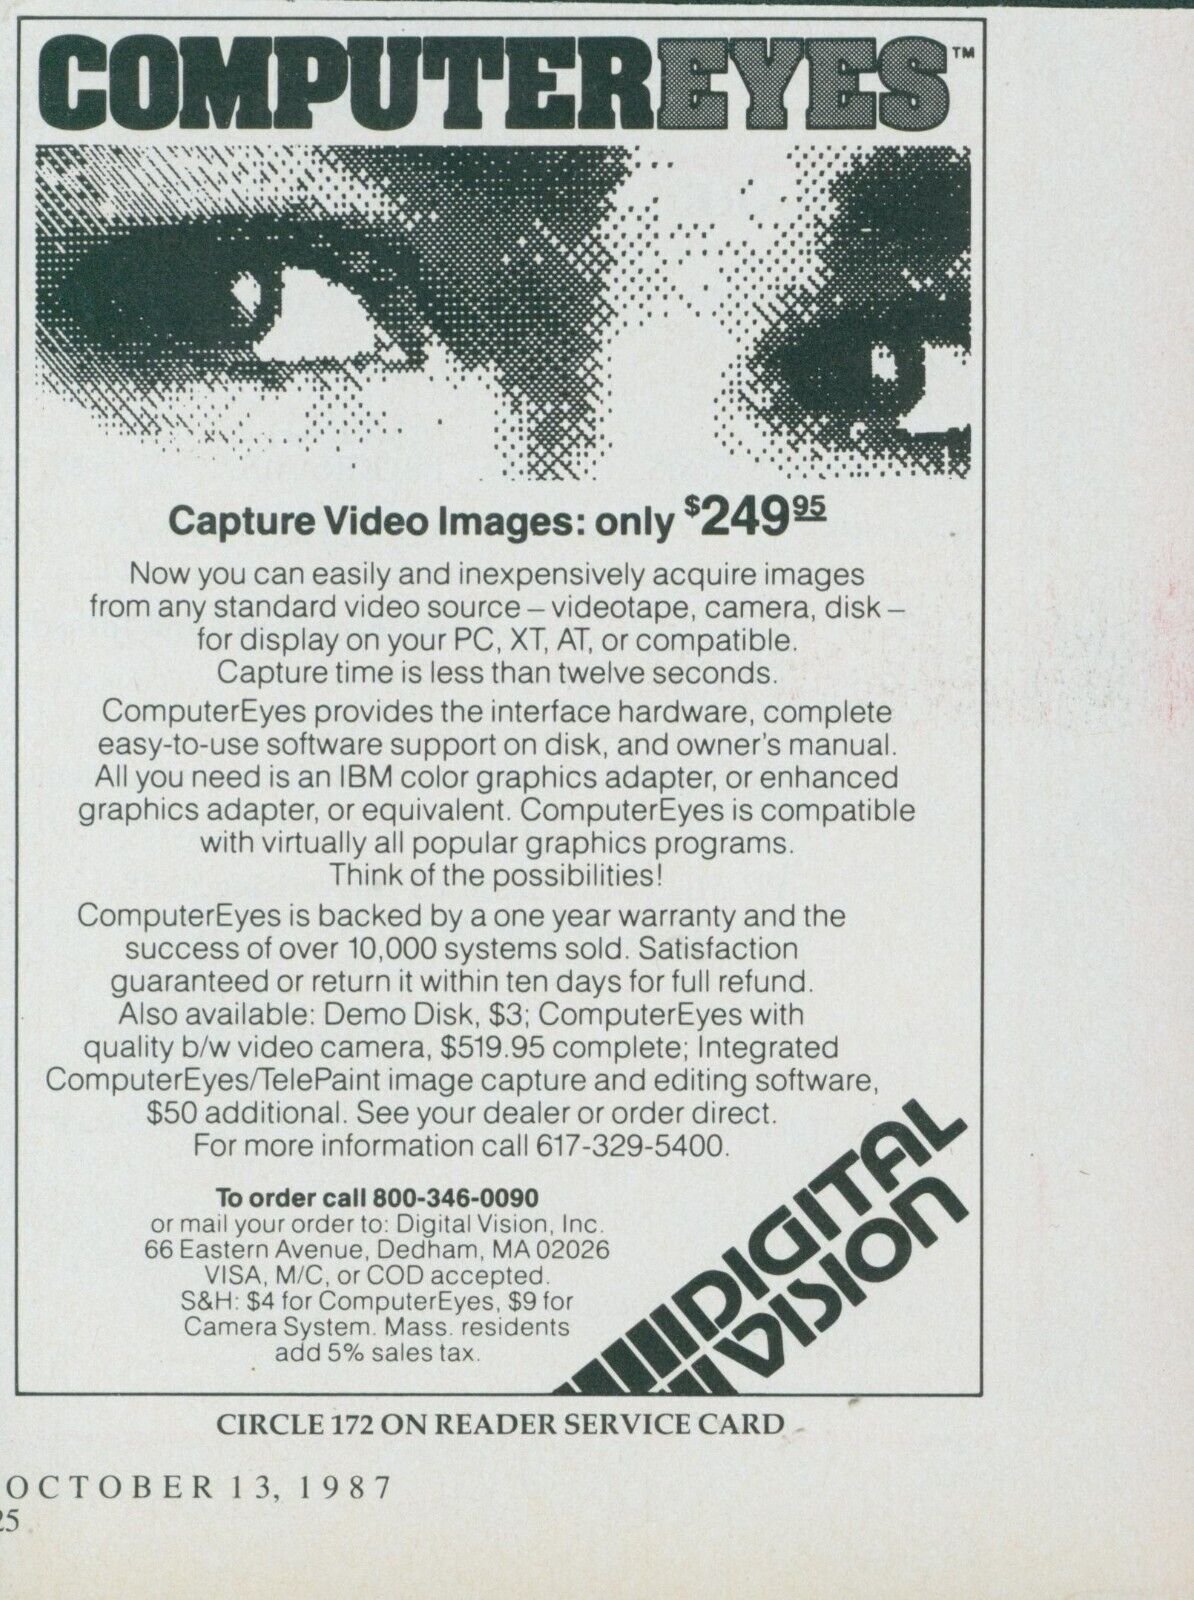 1987 Computer Eyes Capture Video Images Hardware Software Digital Vision Ad PC2